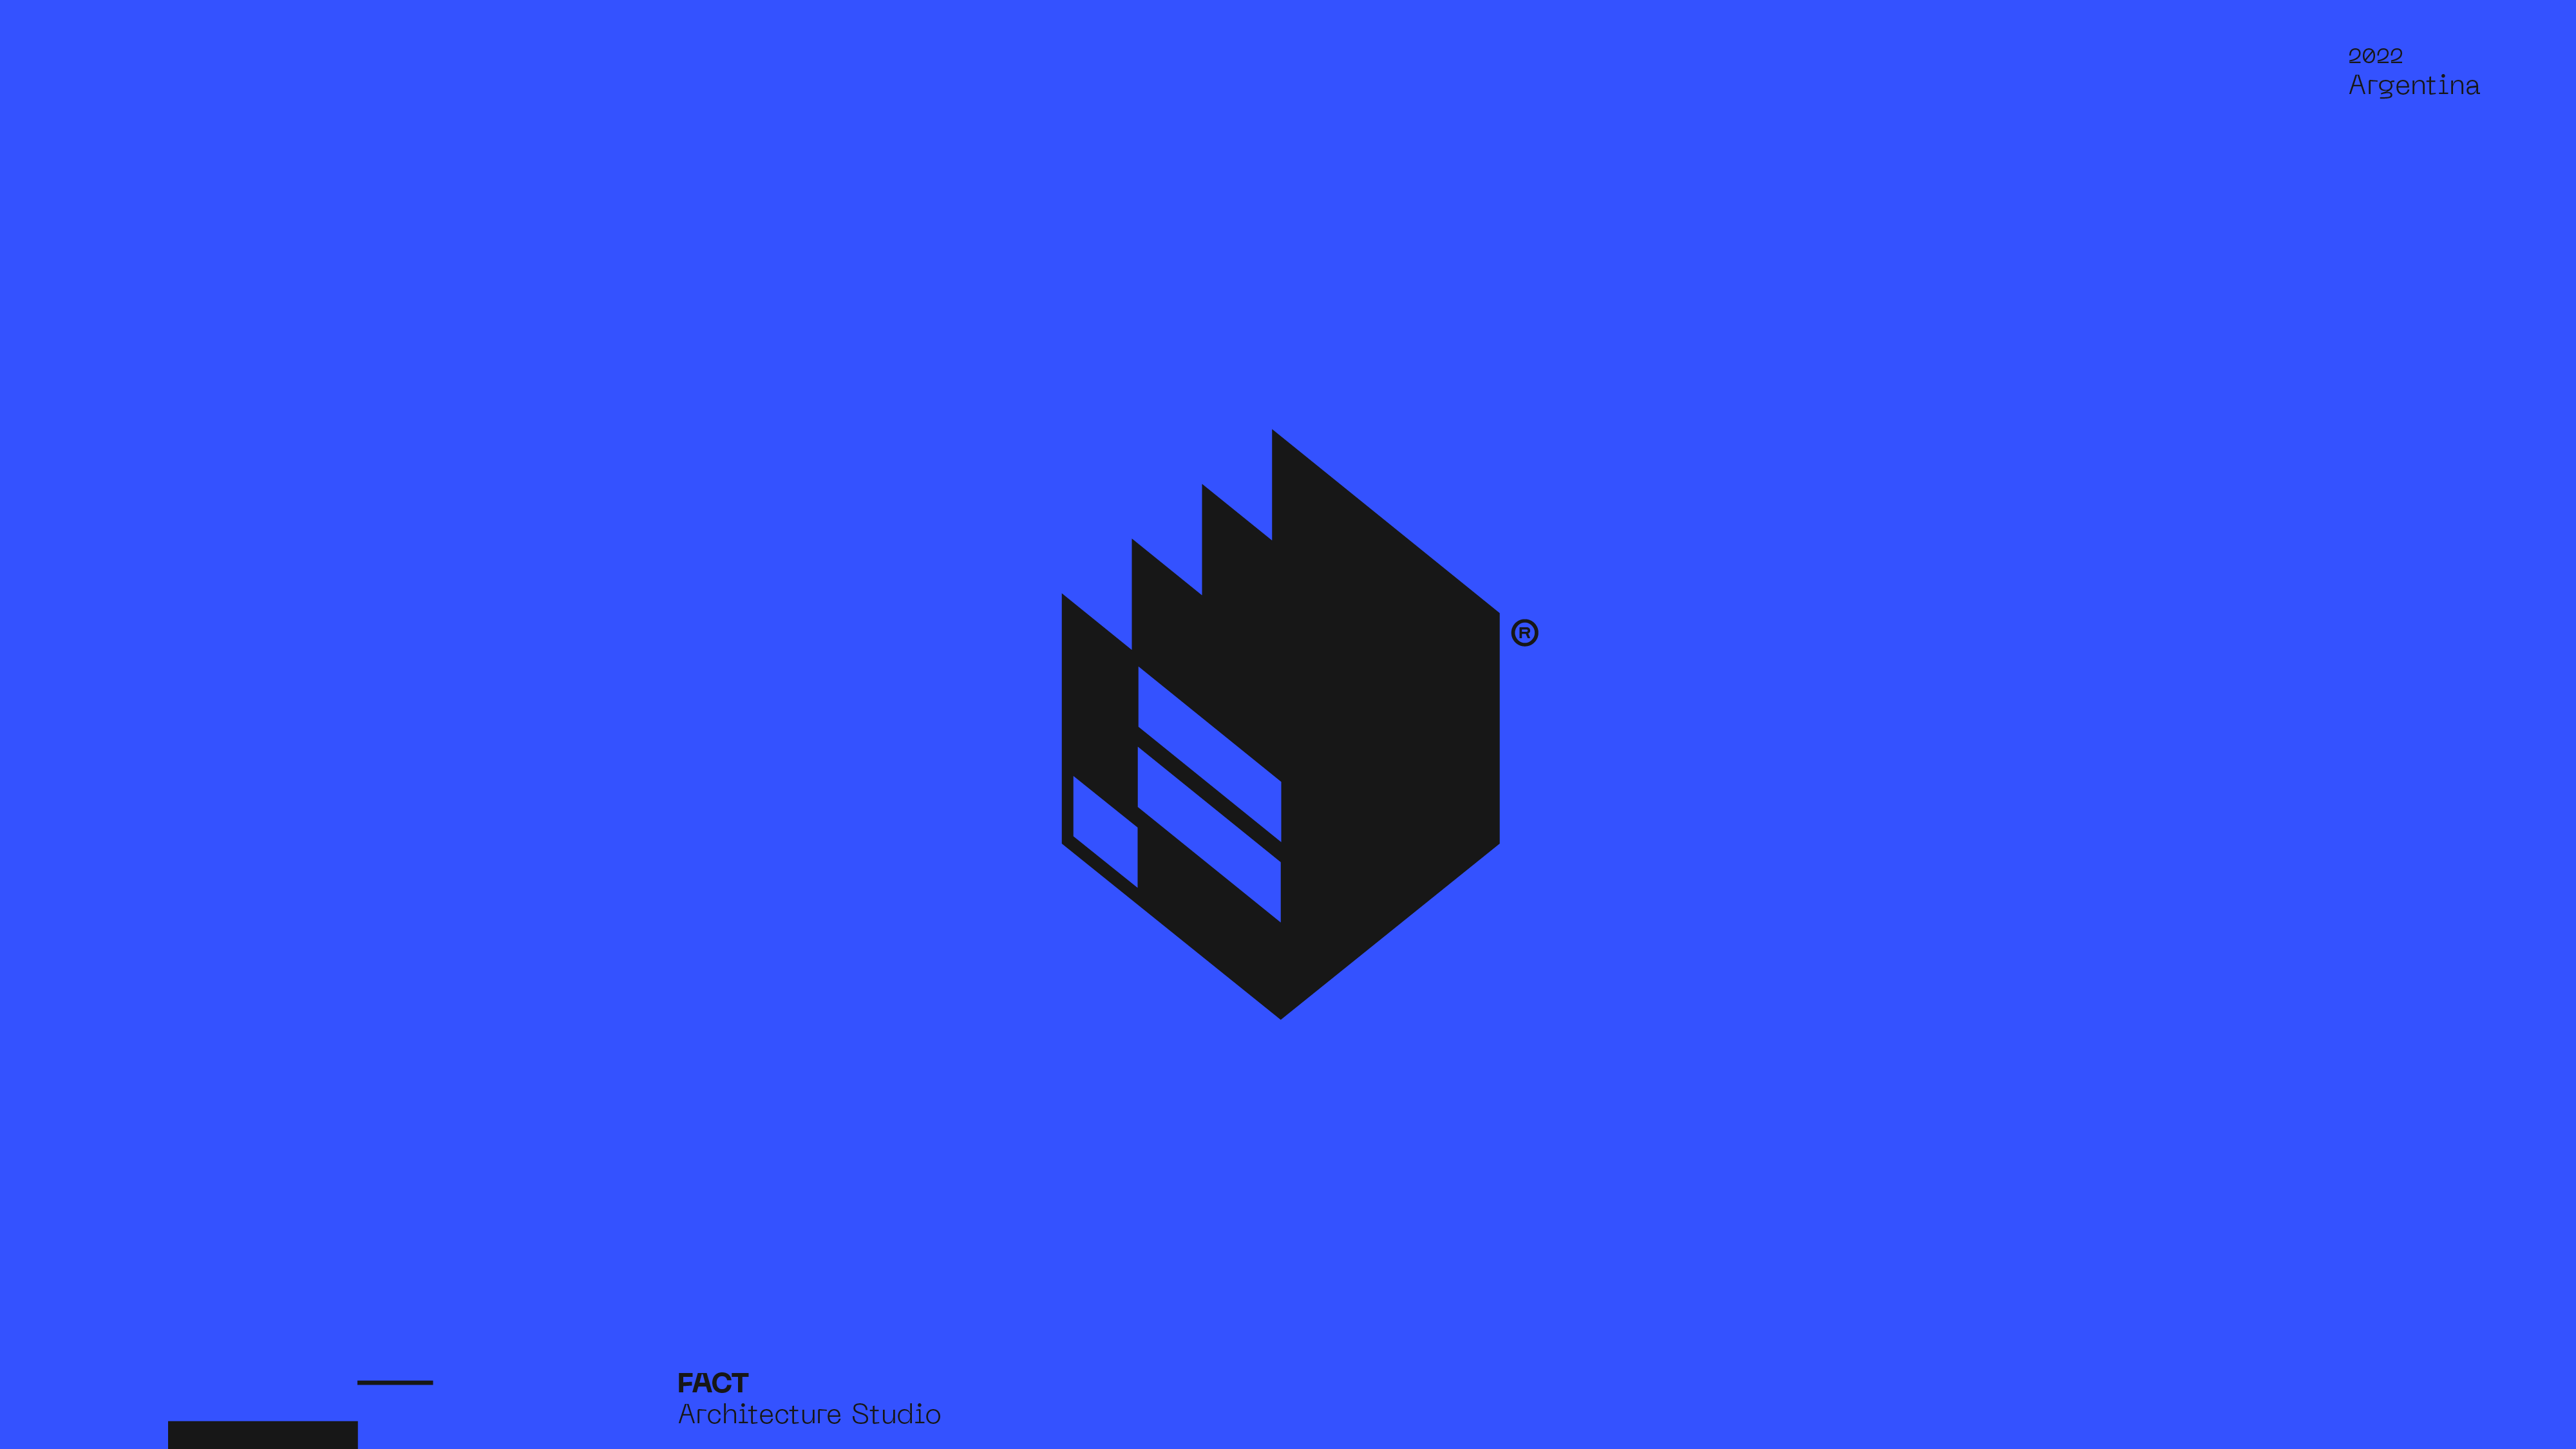 Guapo Design Studio by Esteban Ibarra Logofolio 2022 logo designer — FACT